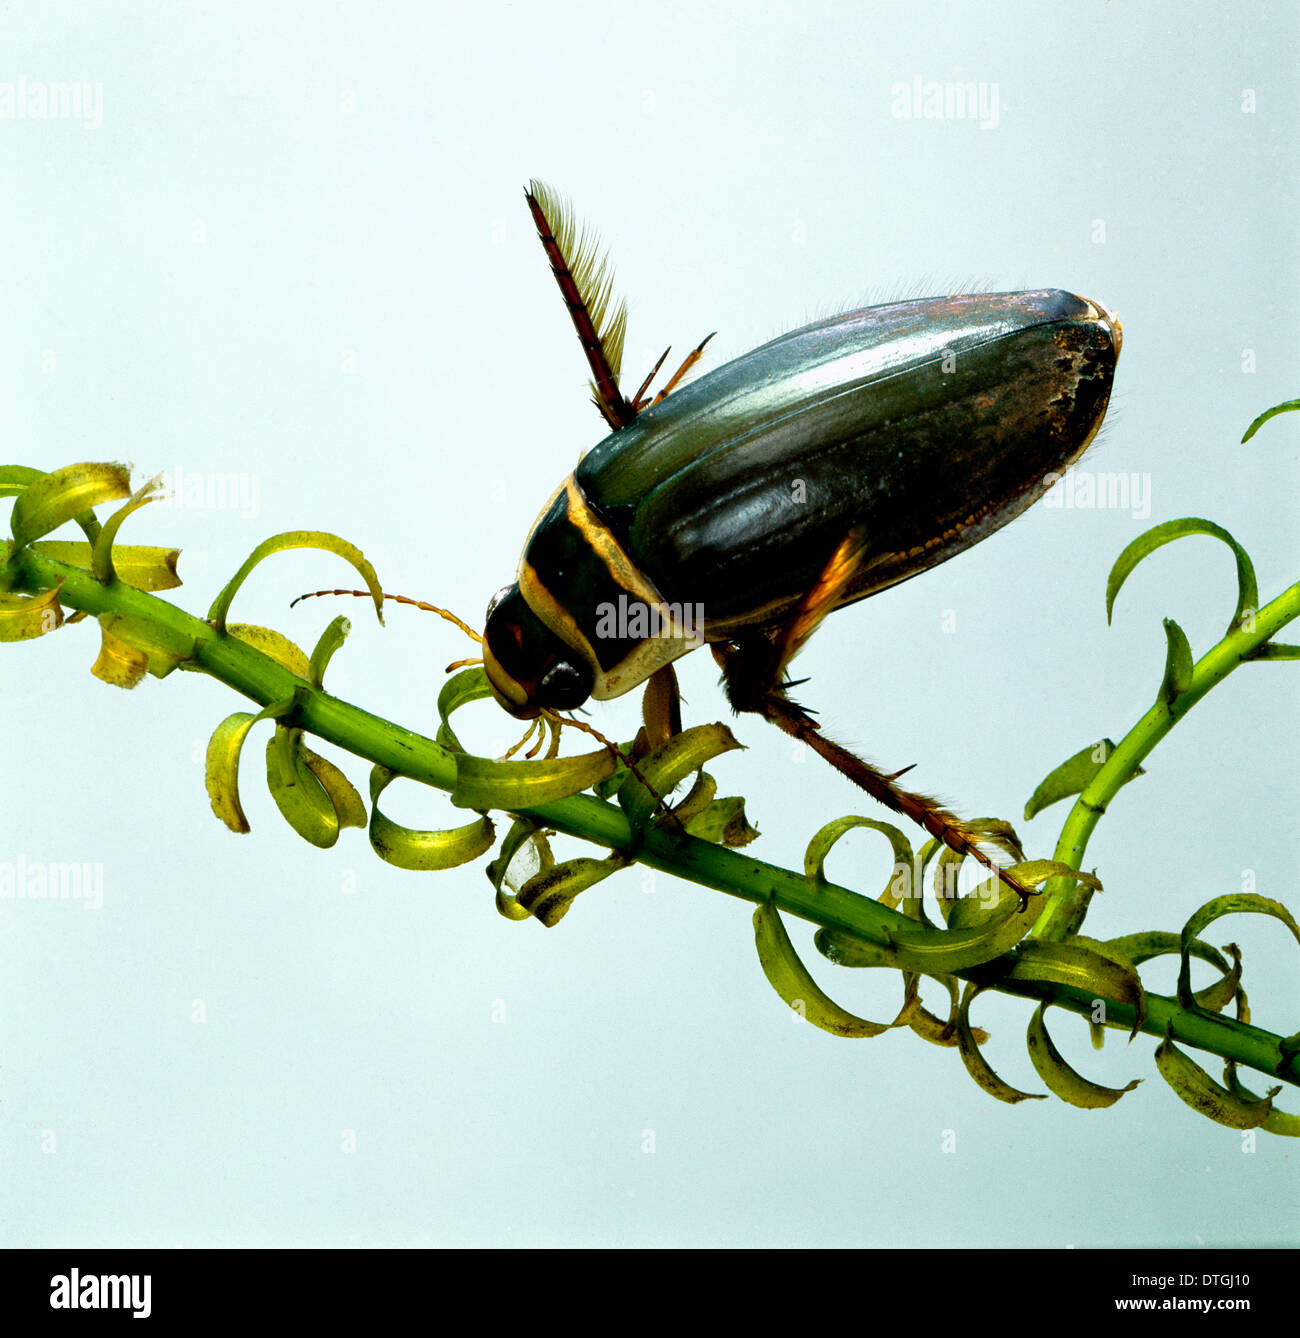 Dytiscus marginalis, great diving beetle Stock Photo